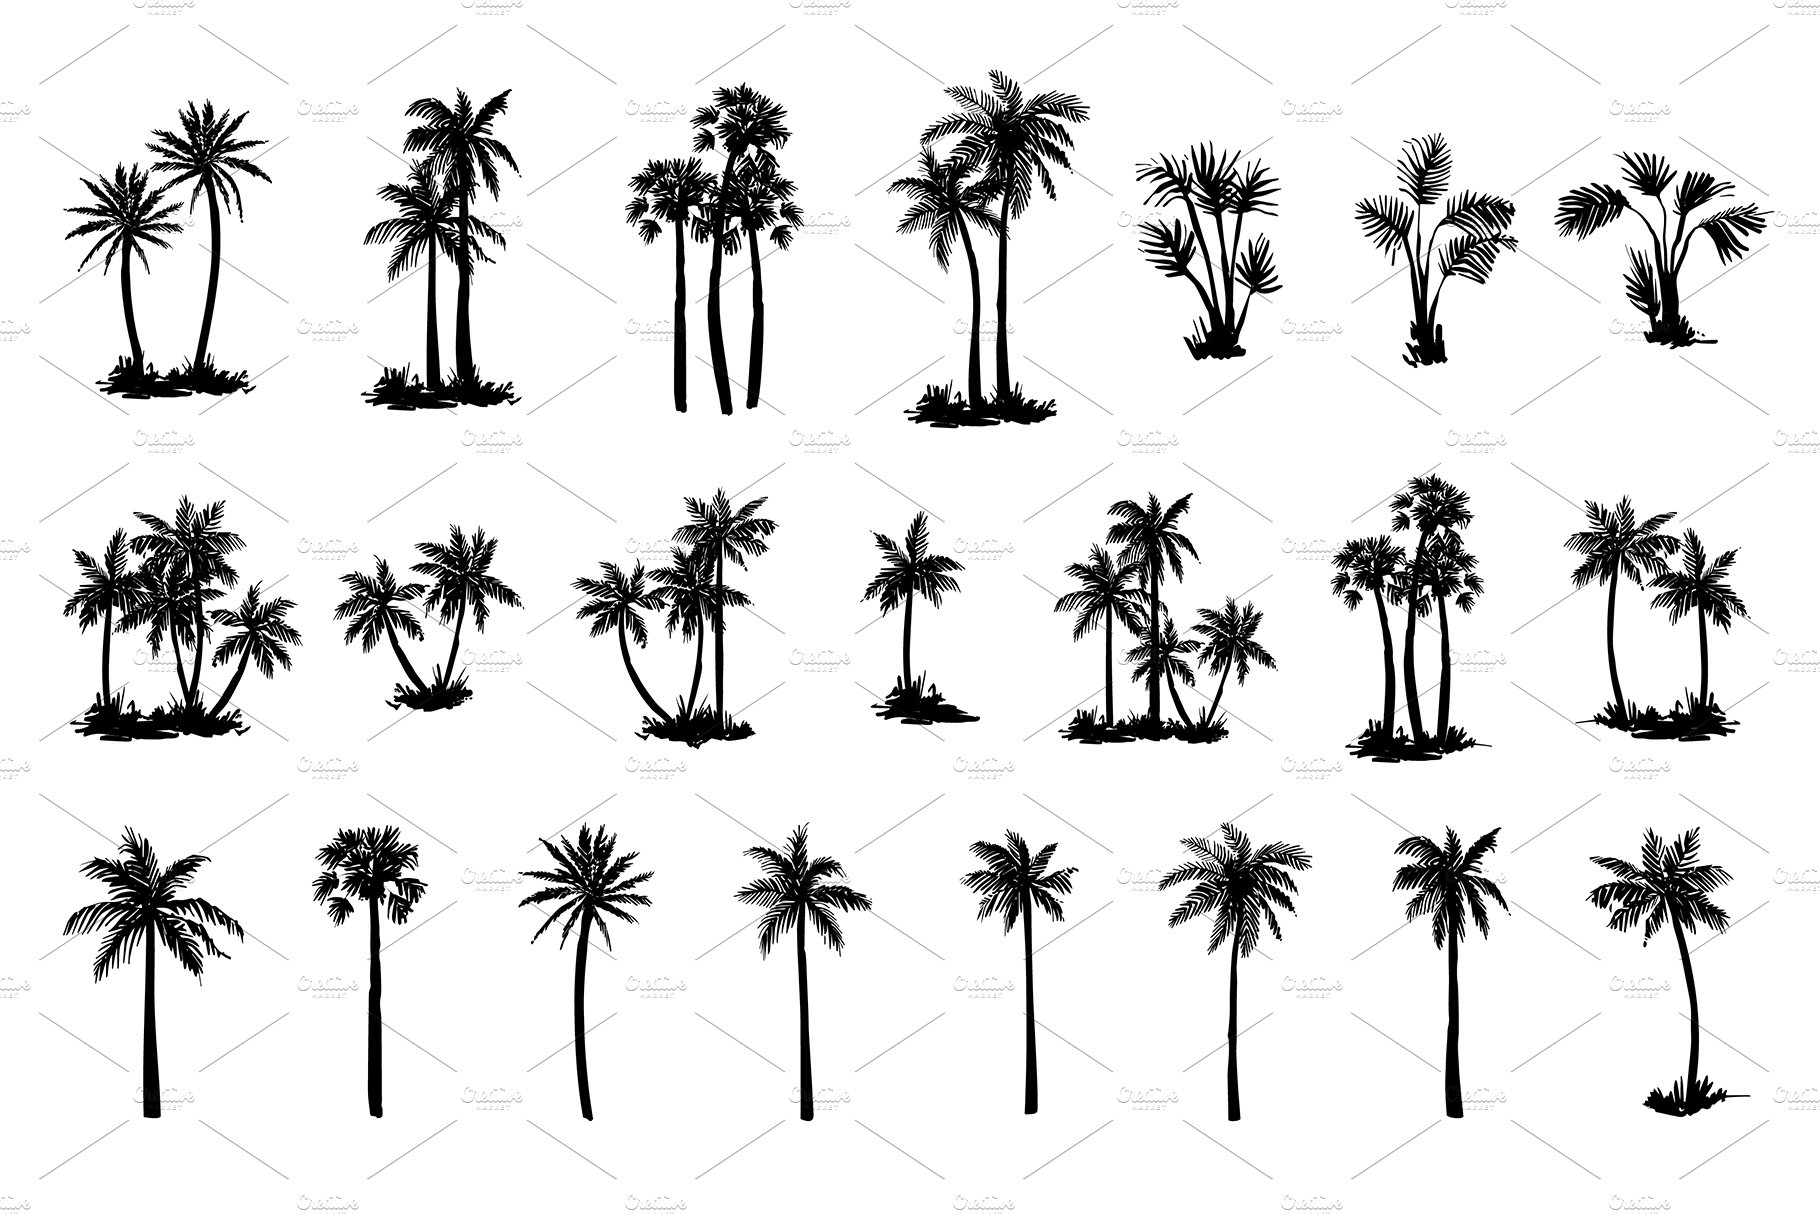 Hand drawn palm tree set cover image.